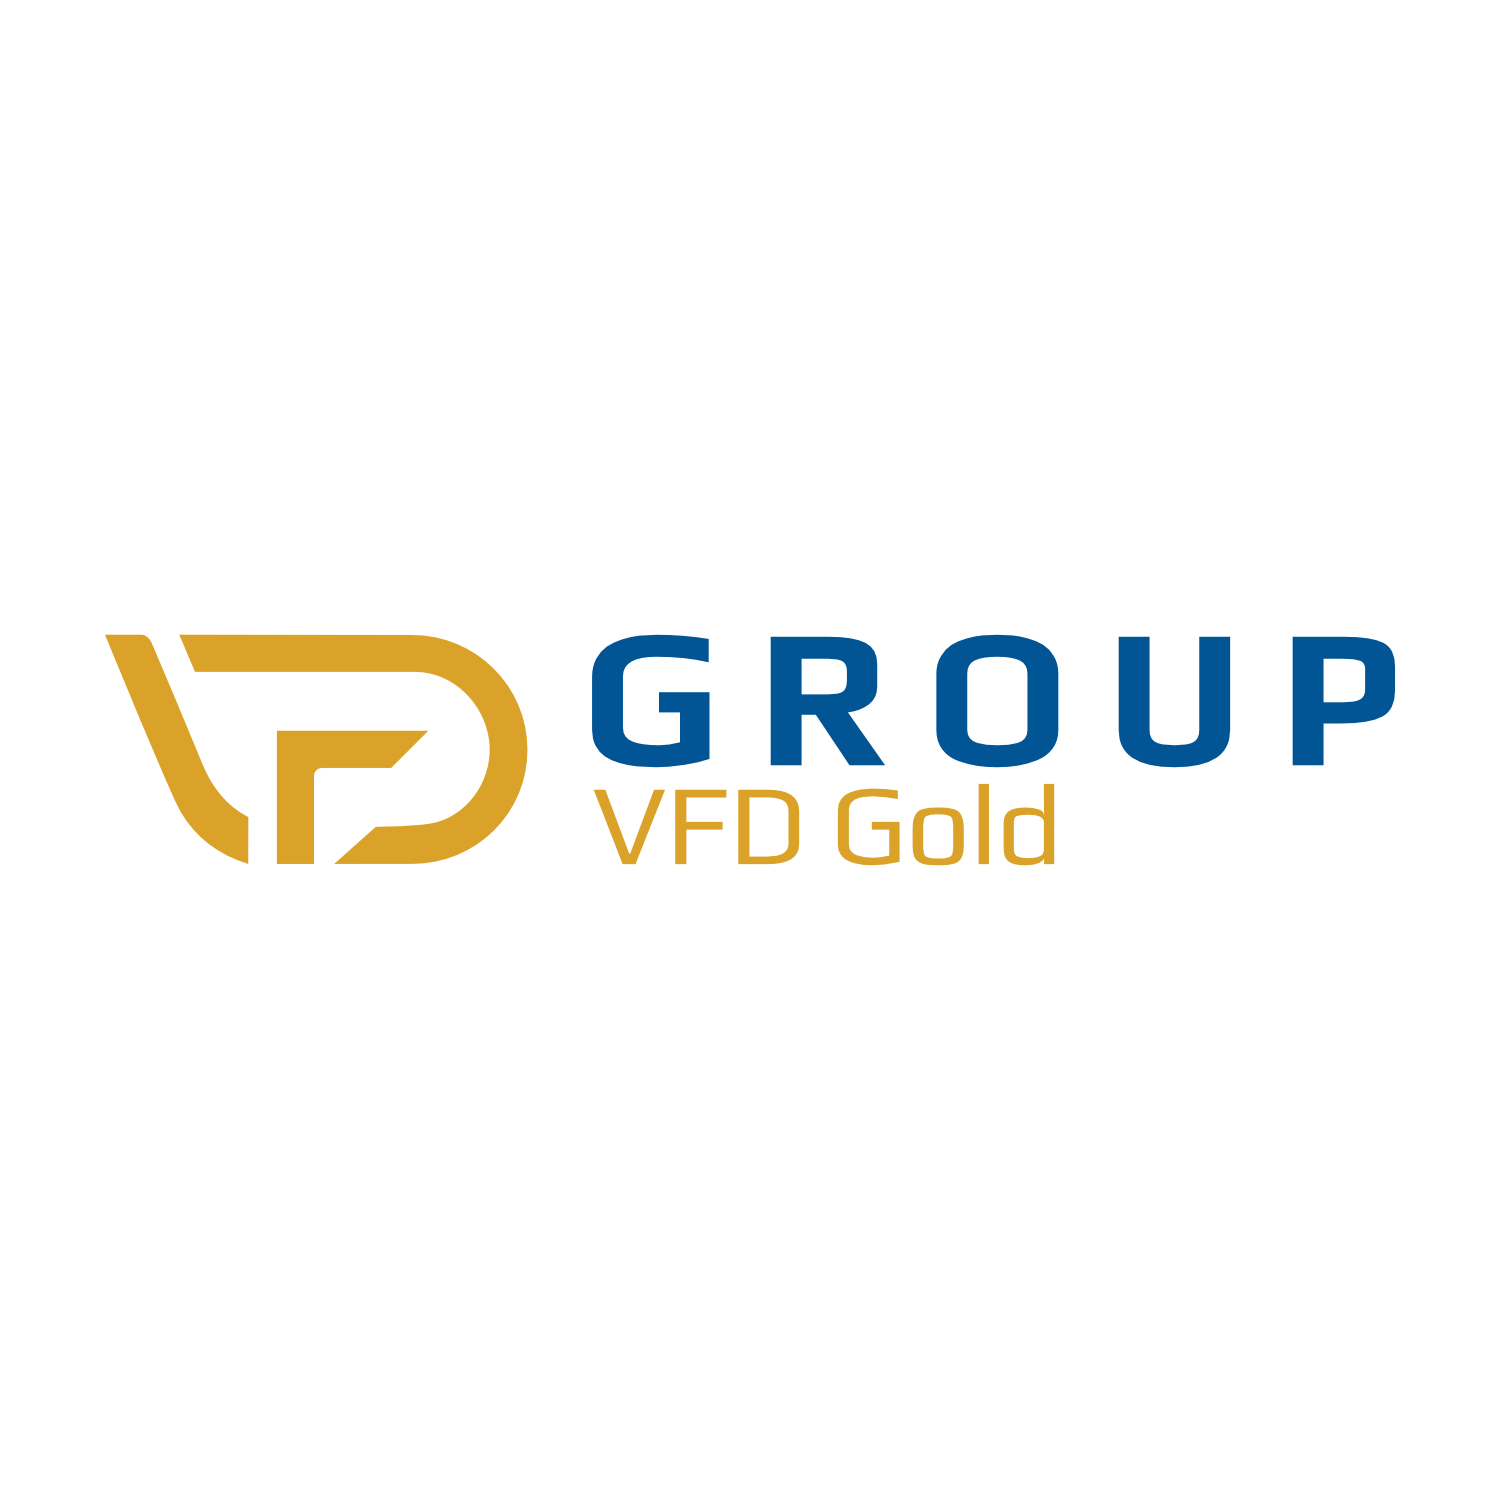 VFD Gold logo